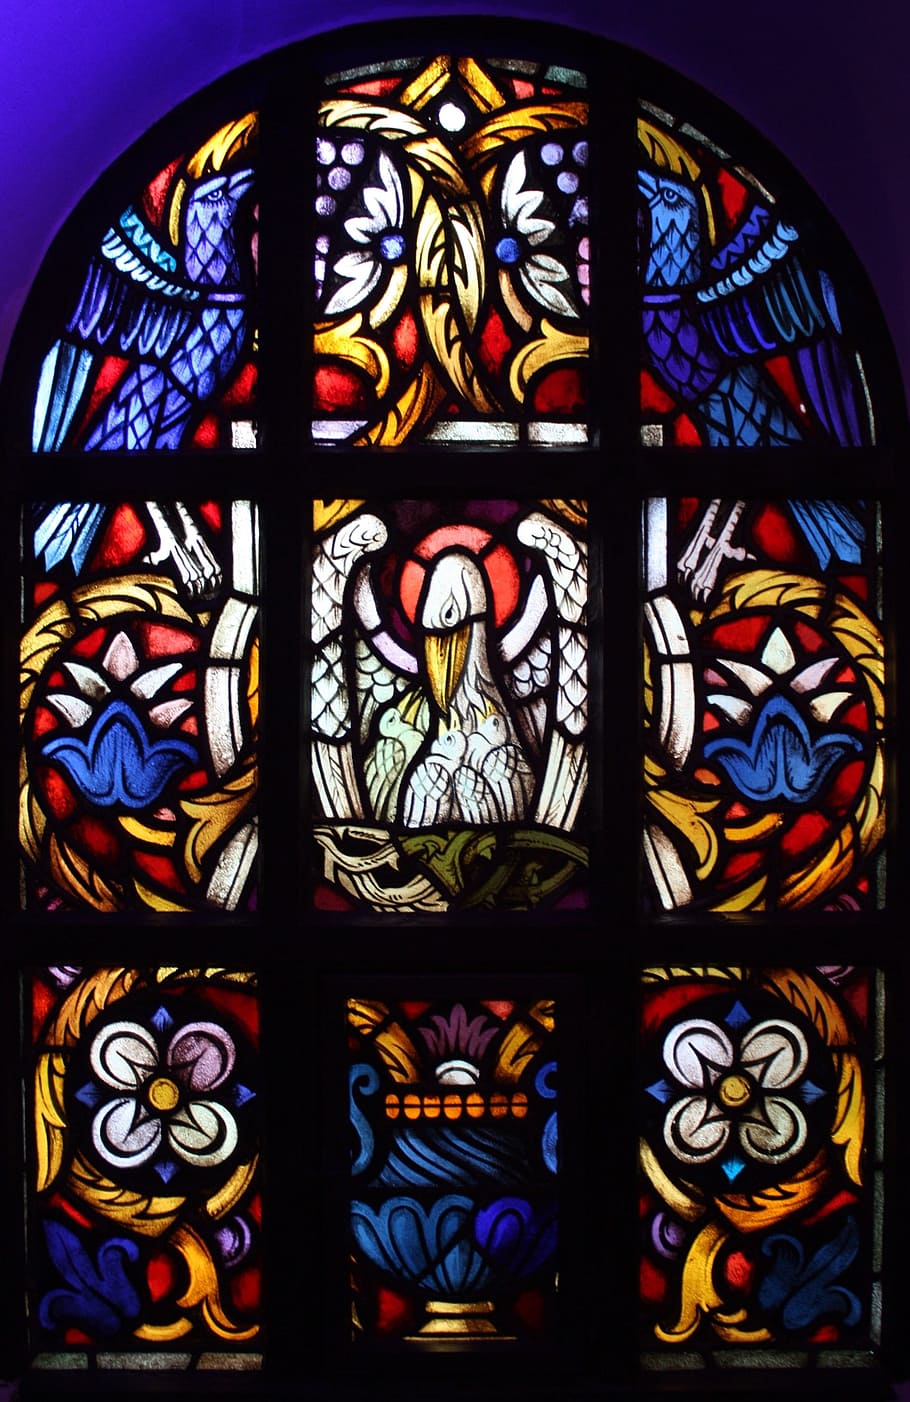 pelikan, church window, agape, jesus, love, devotion, victims, christ, heart, stained glass